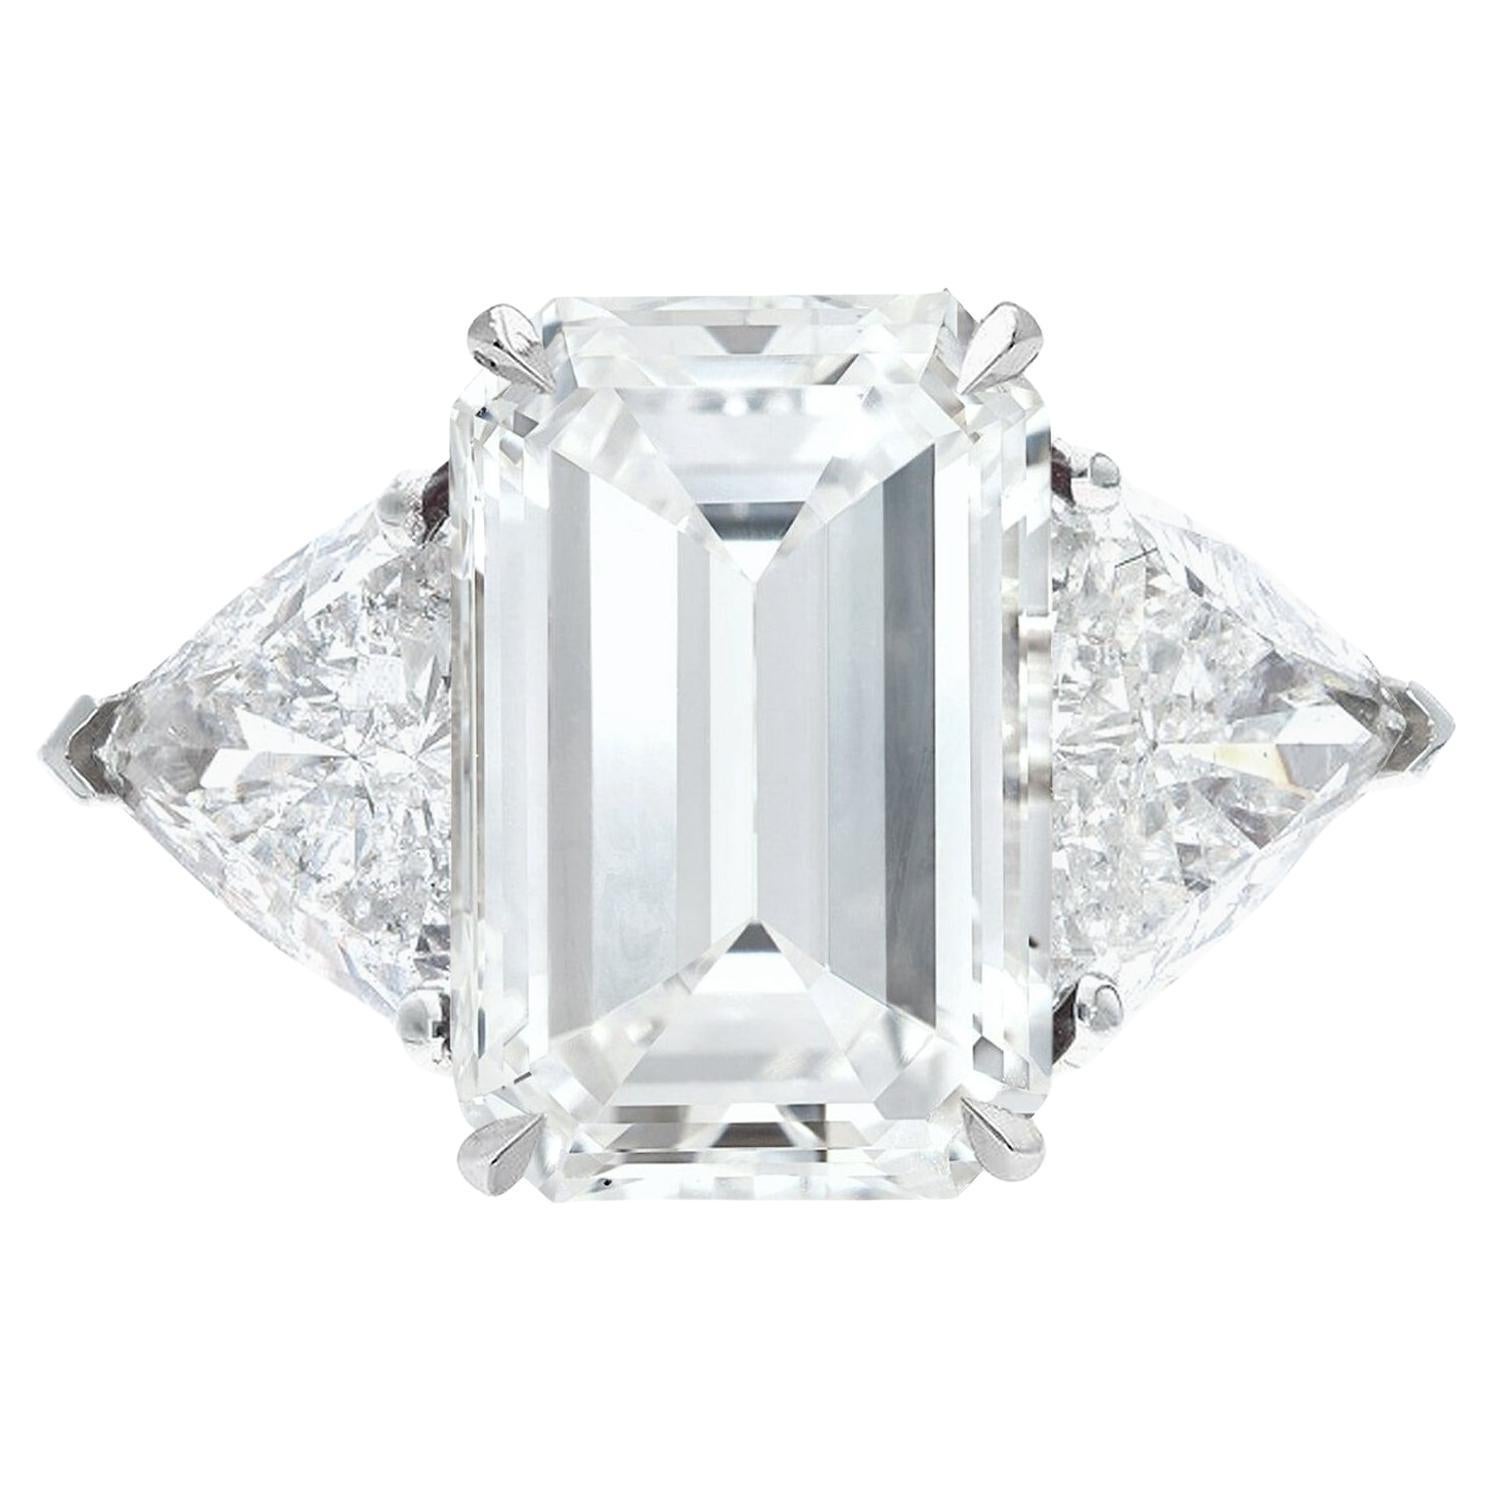 Bague en diamant certifié GIA 5 carats taille émeraude Golconda Type IIA